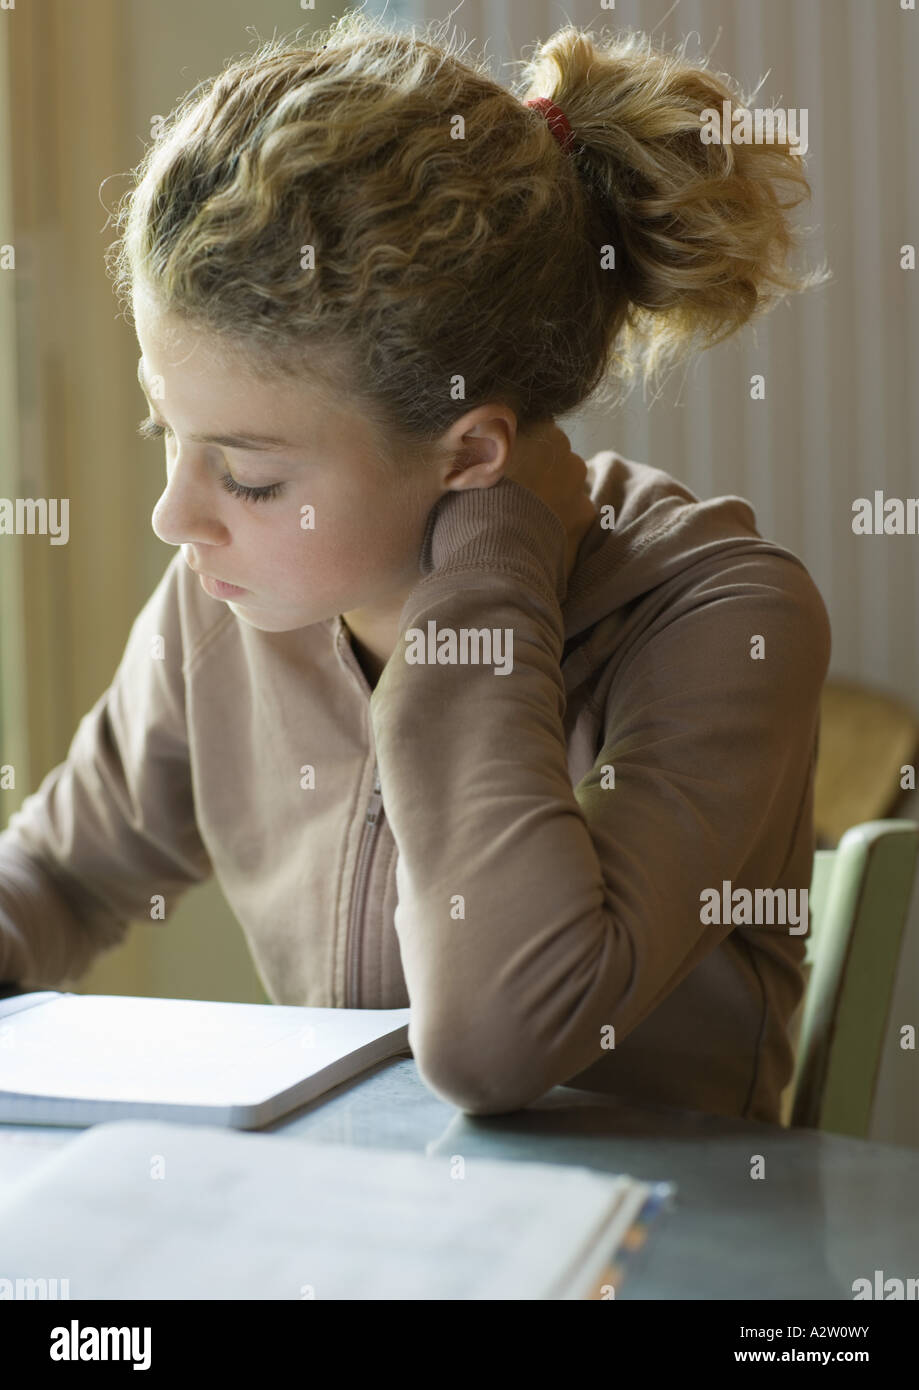 Preteen girl doing homework Stock Photo